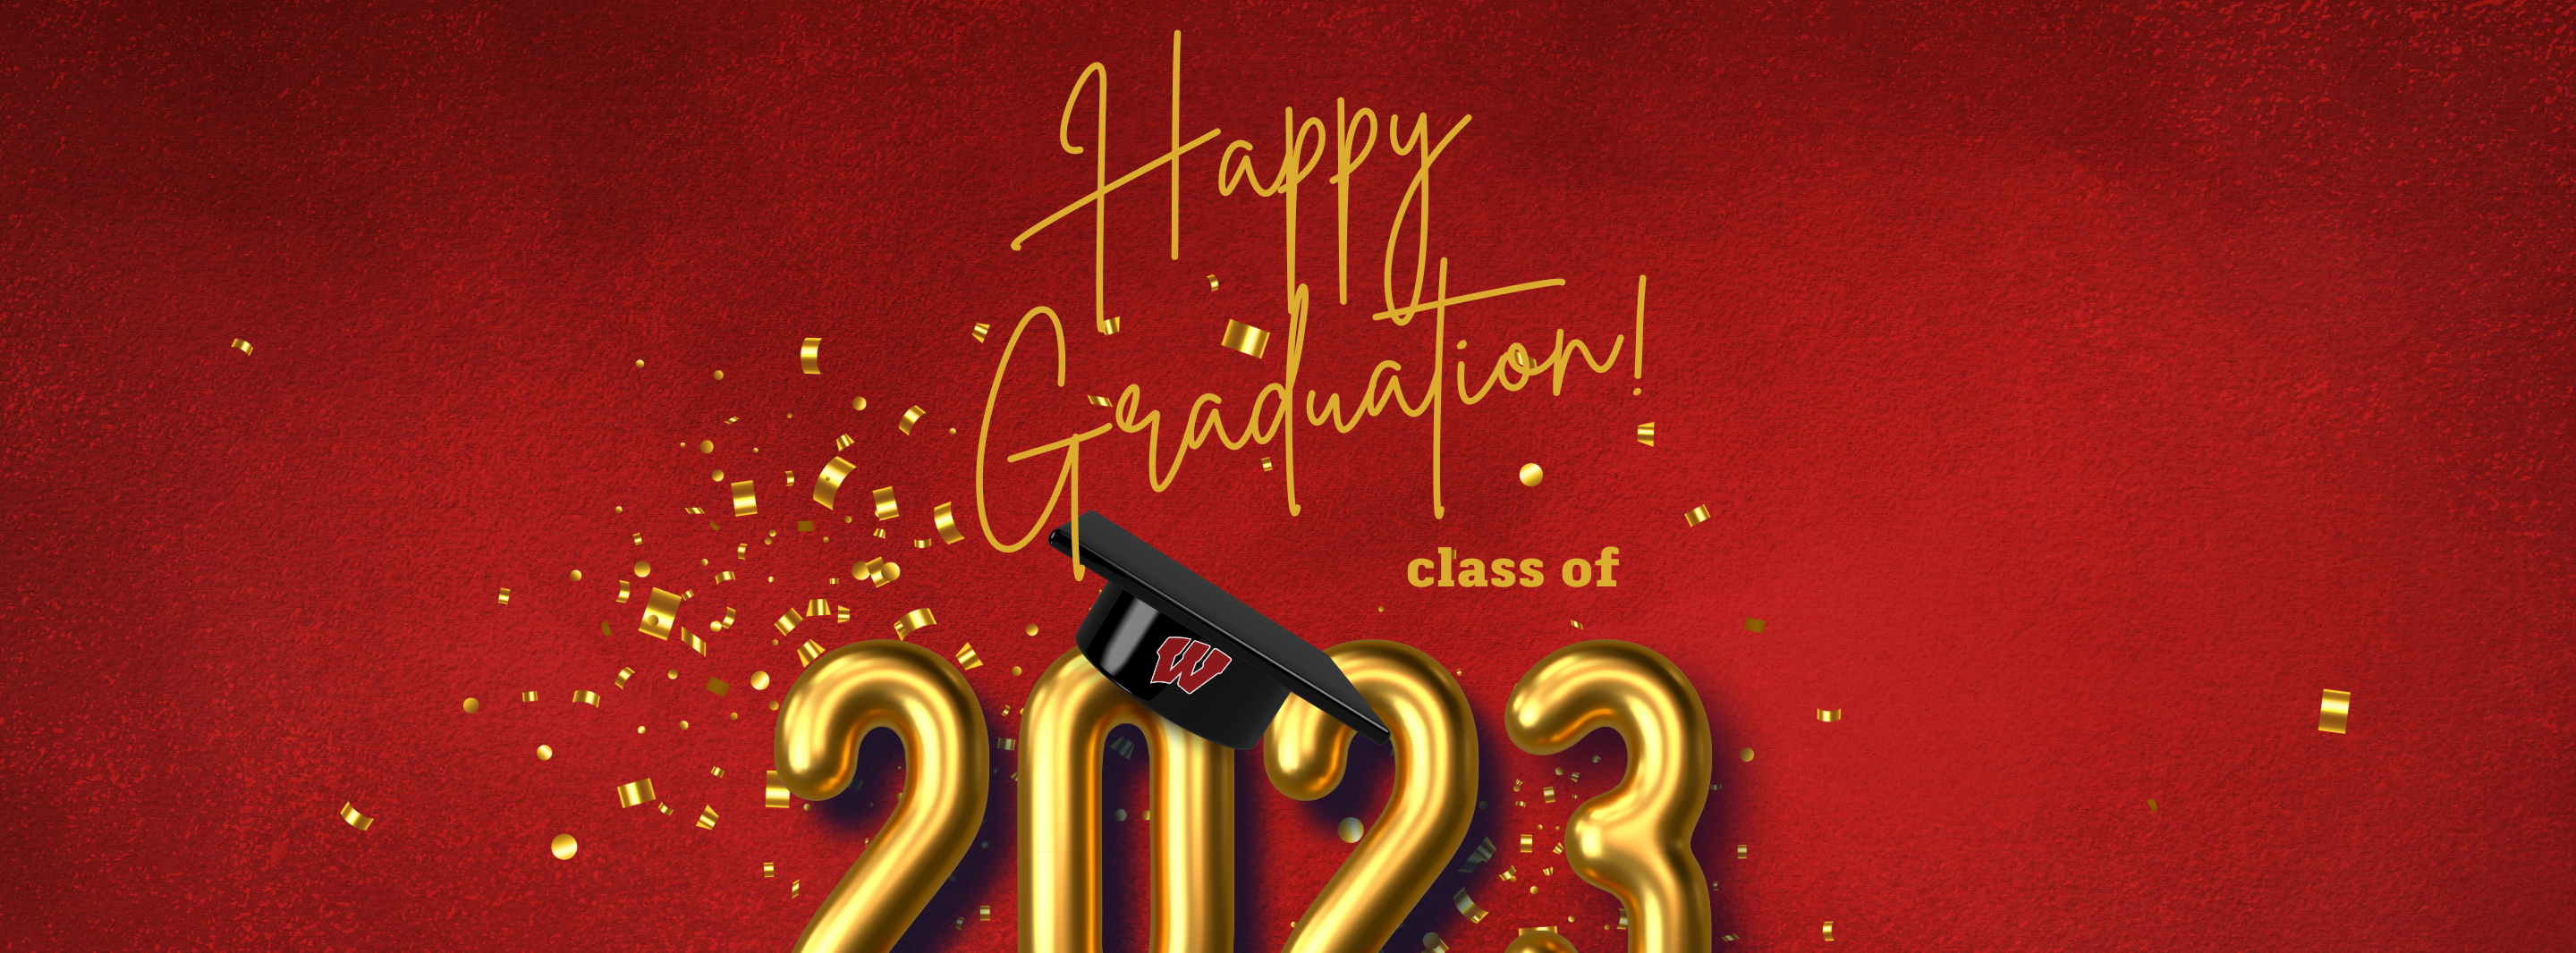 Graduation Graphic Happy graduation class of 2023